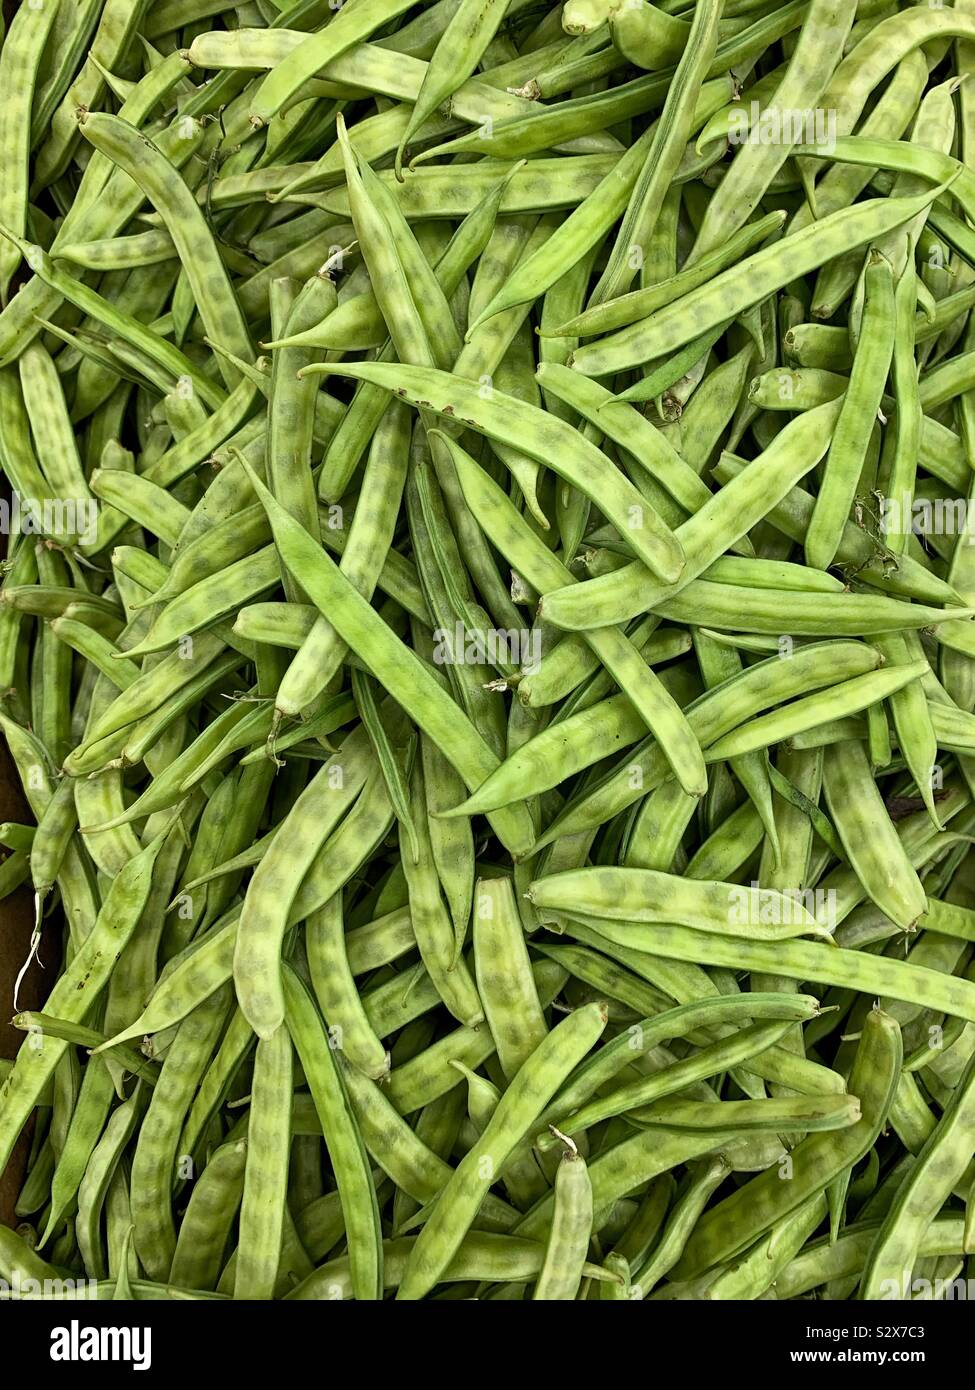 C. tetragonoloba, Cyamopsis tetragonoloba, guar bean, cluster bean, gavar, guwar, or guvar bean. Stock Photo